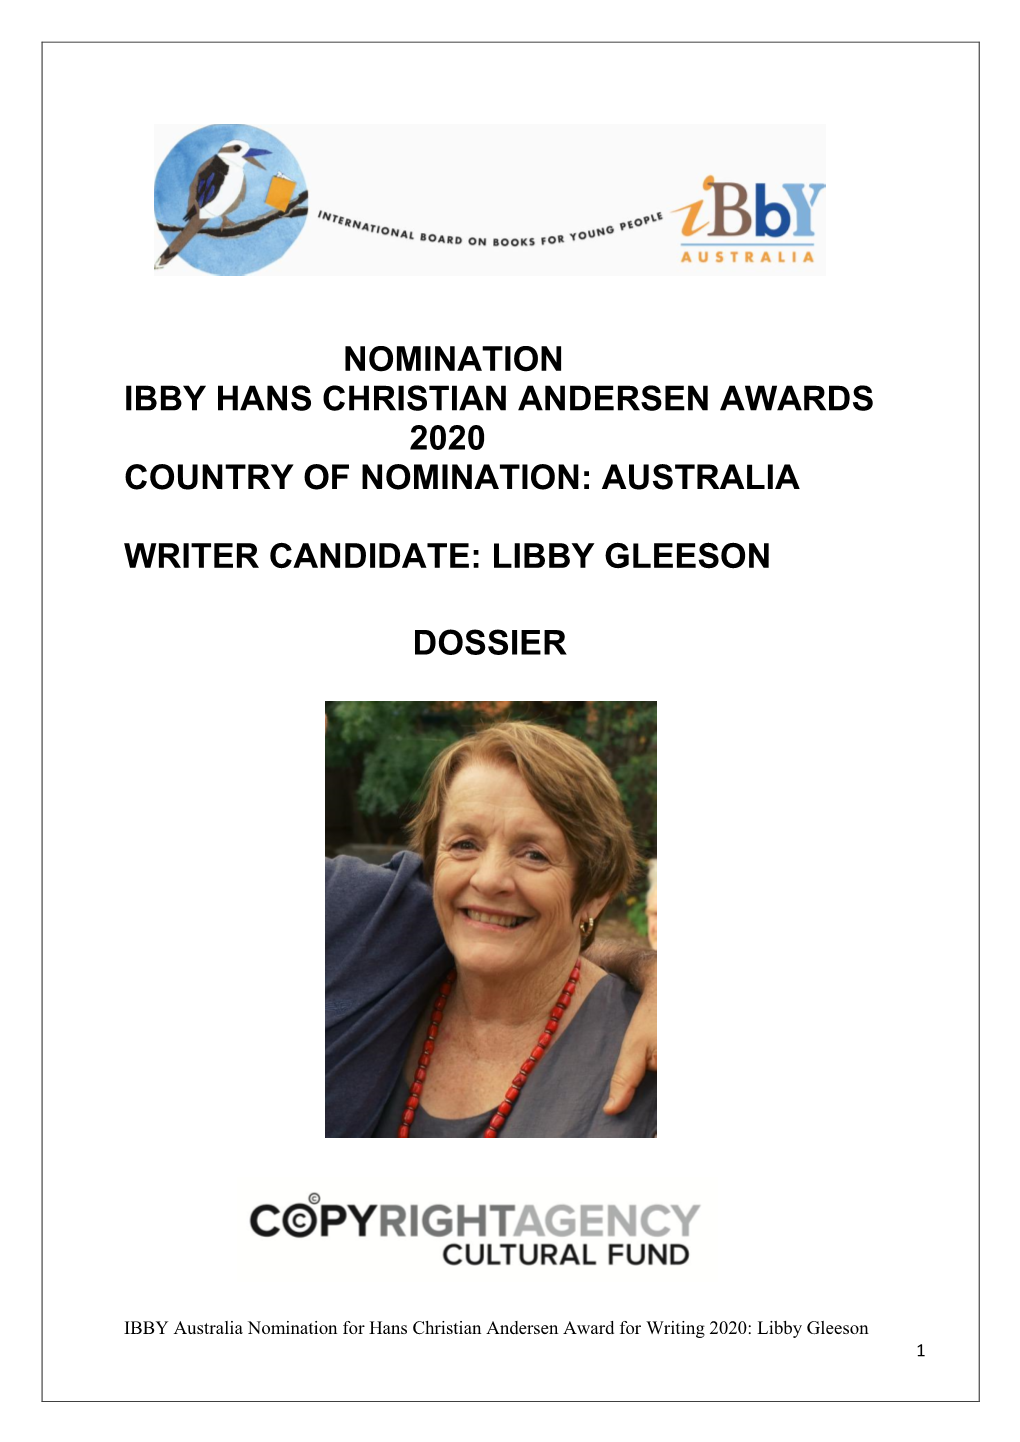 Australia Writer Candidate: Libby Gleeson Dossier